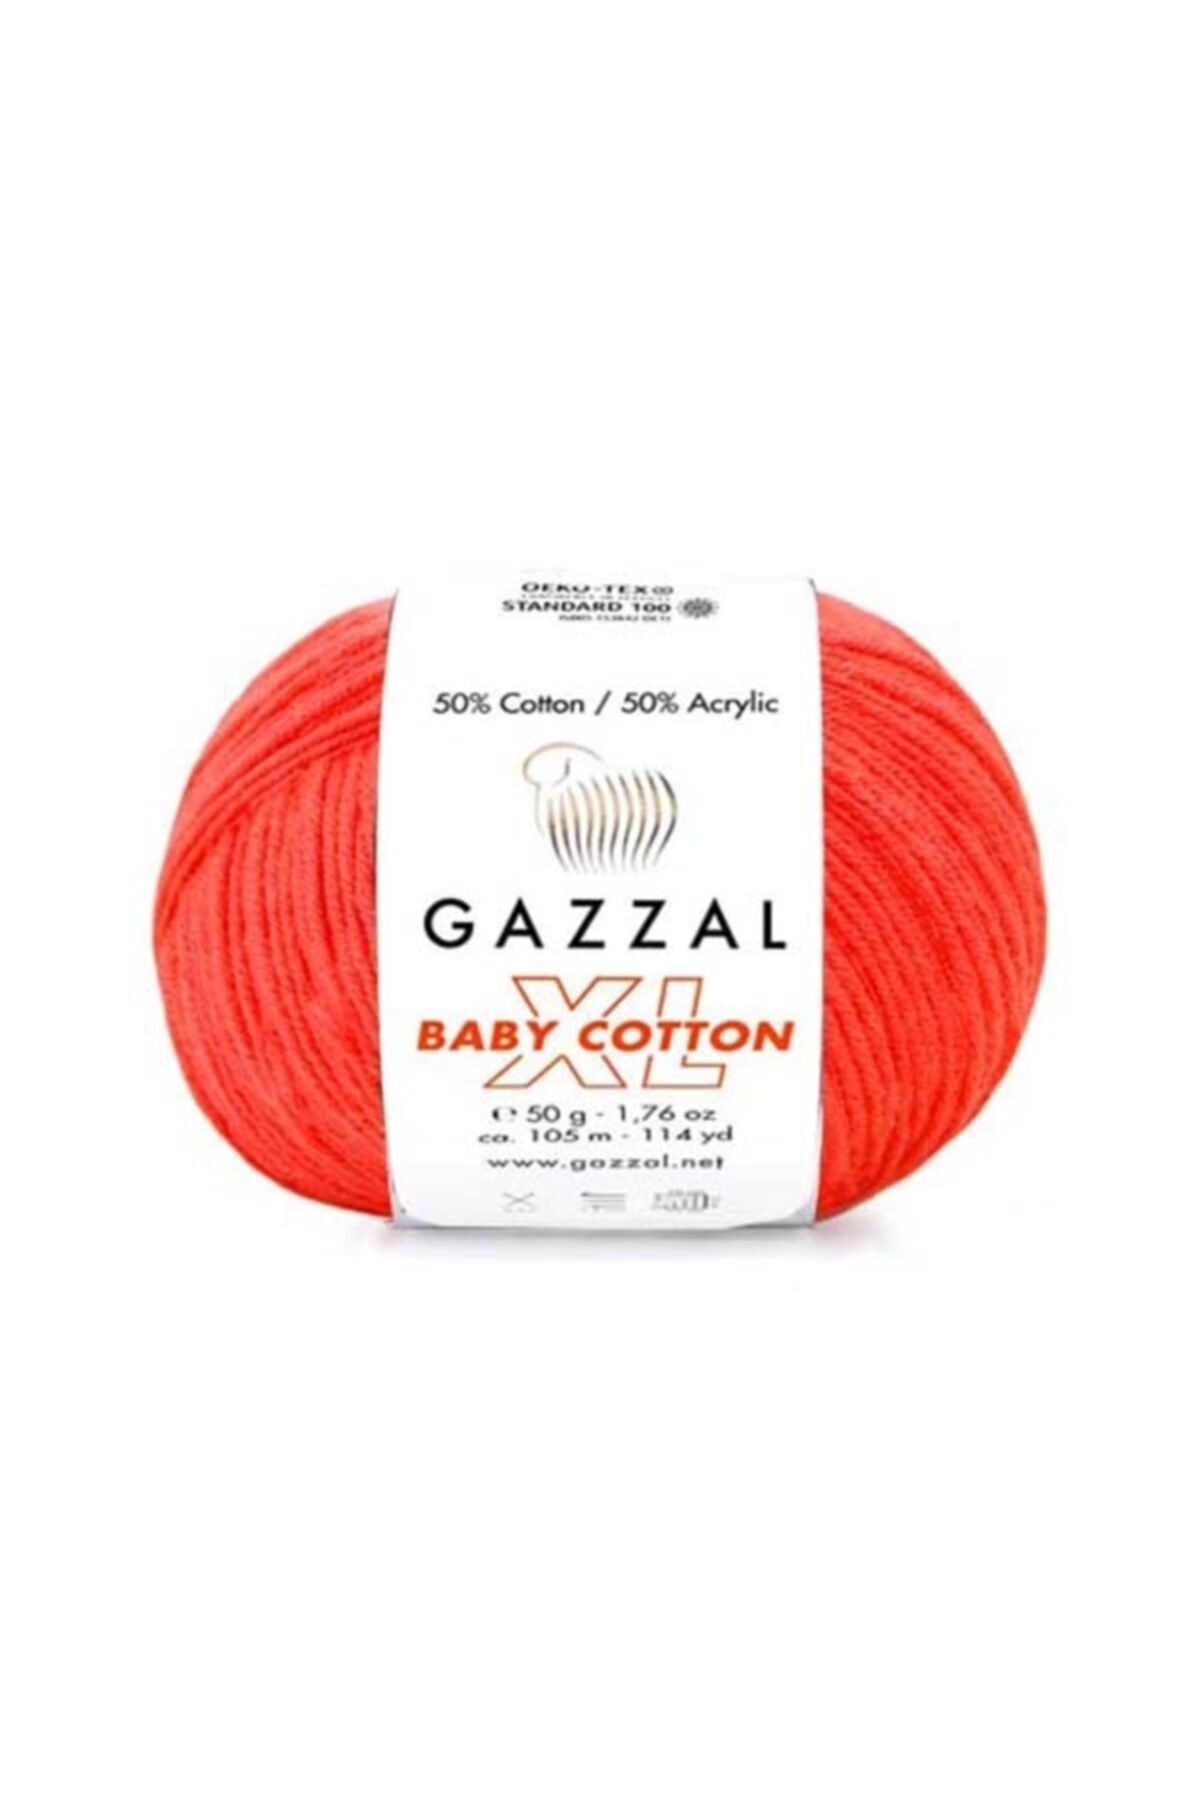 Gazzal Baby Cotton Xl Amigurumi Ipi Neon Turuncu - 3459 - 50 Gr. Punch Ipi